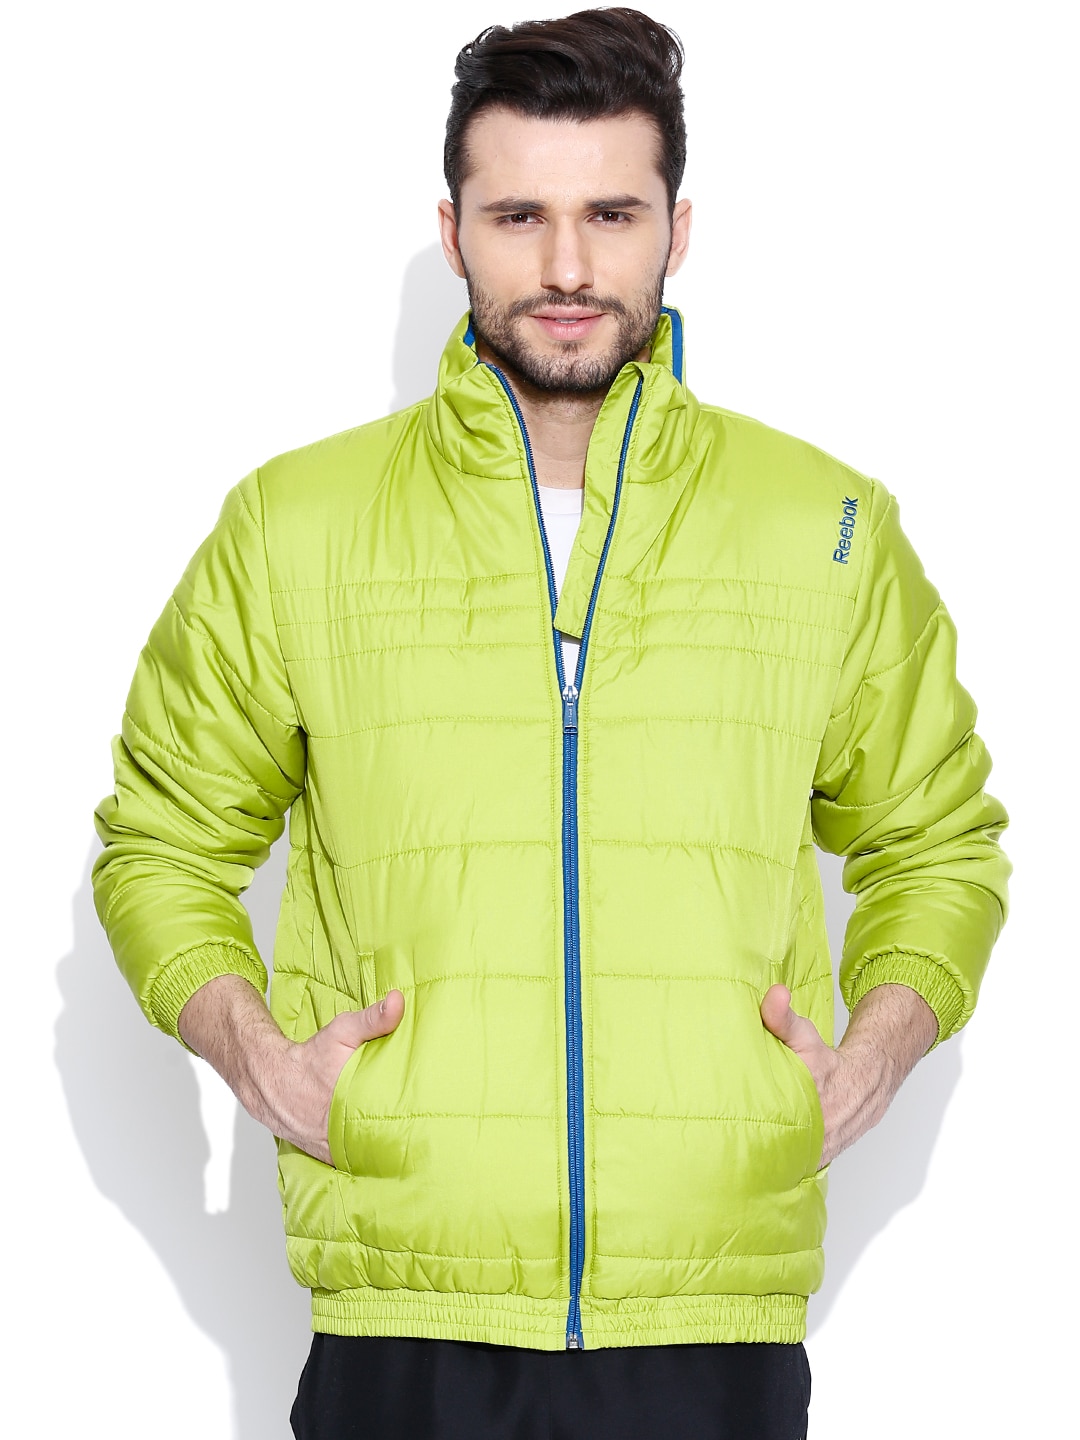 reebok winter jacket price in india